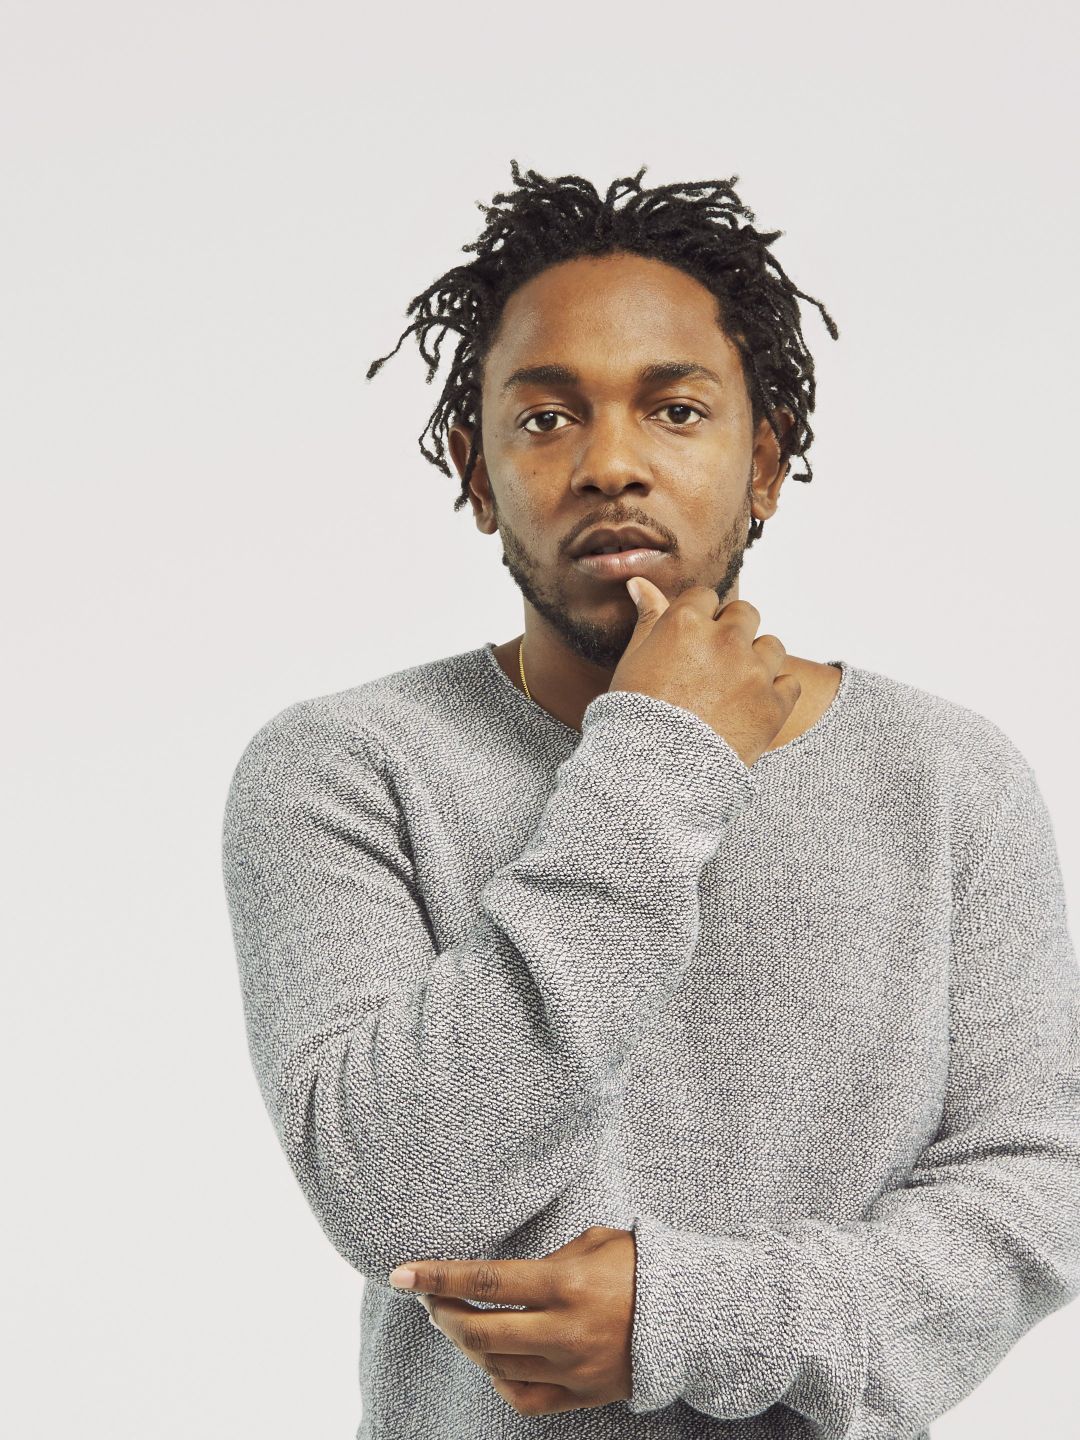 Kendrick Lamar interesting facts